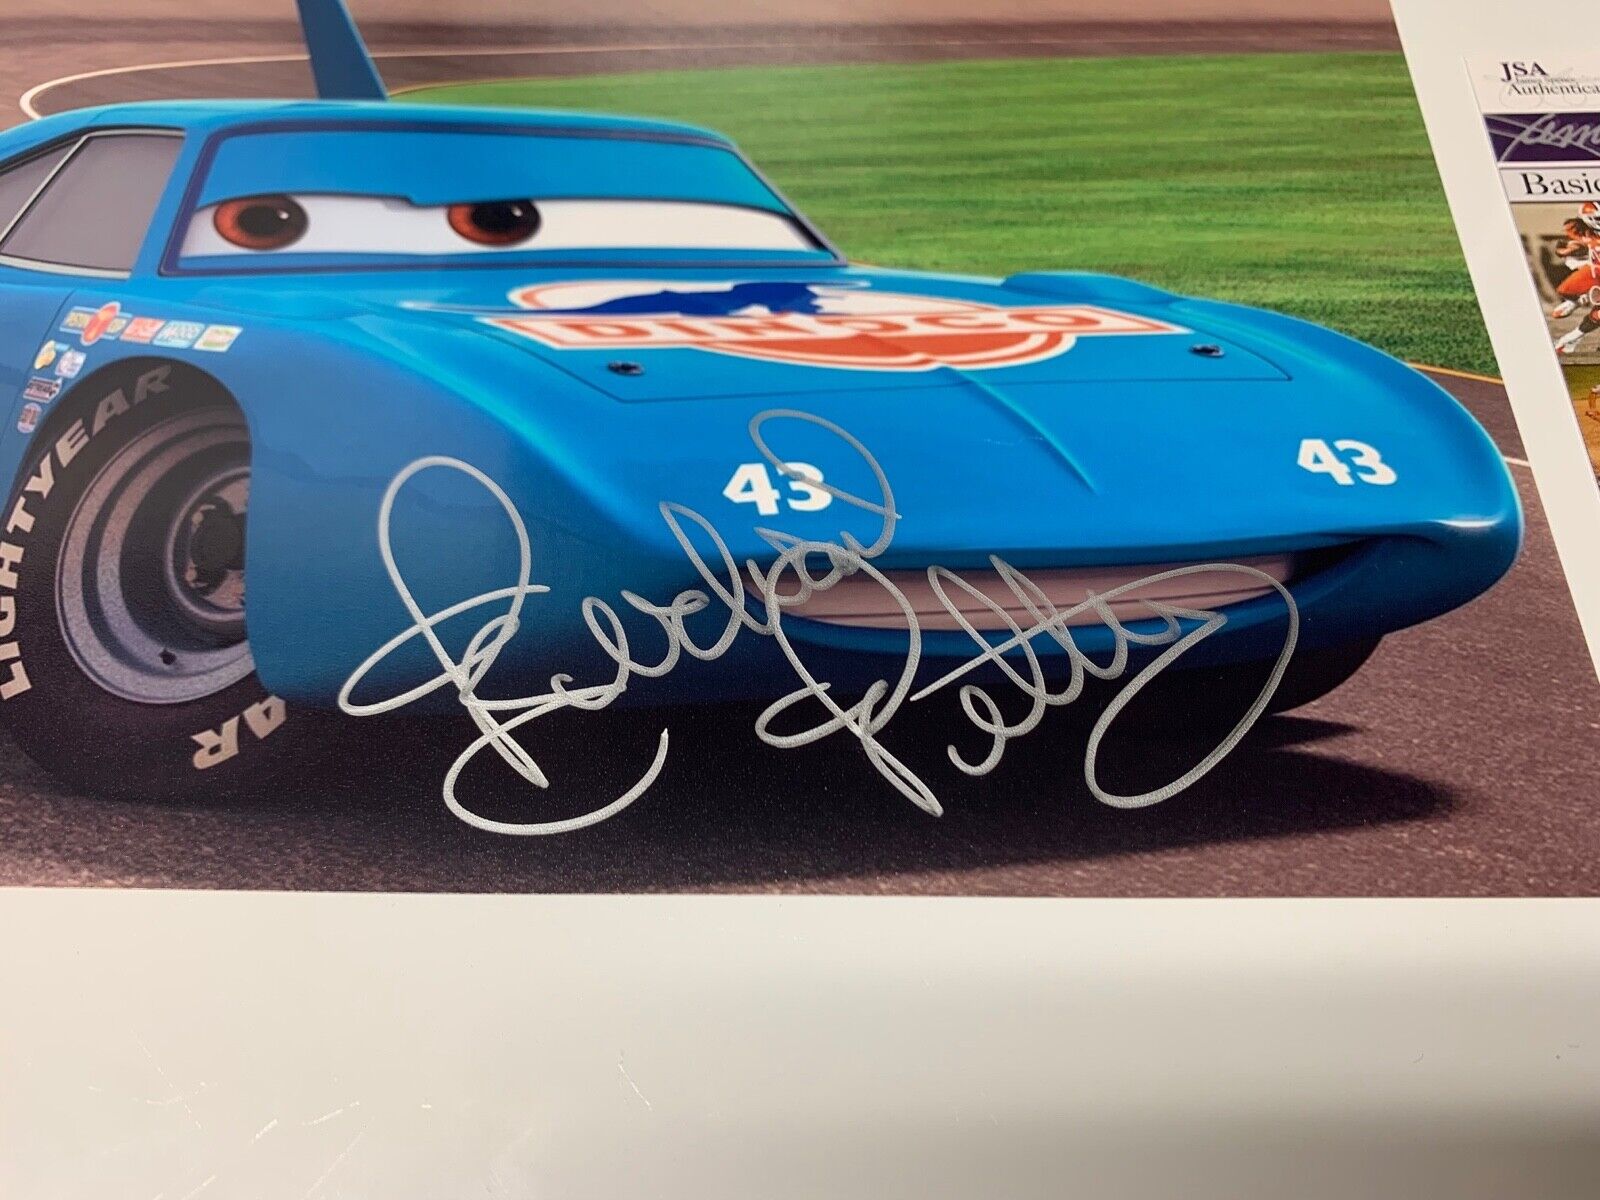 Richard Petty Pixar Cars The King Autographed 8x10 Photo JSA Certified M66333